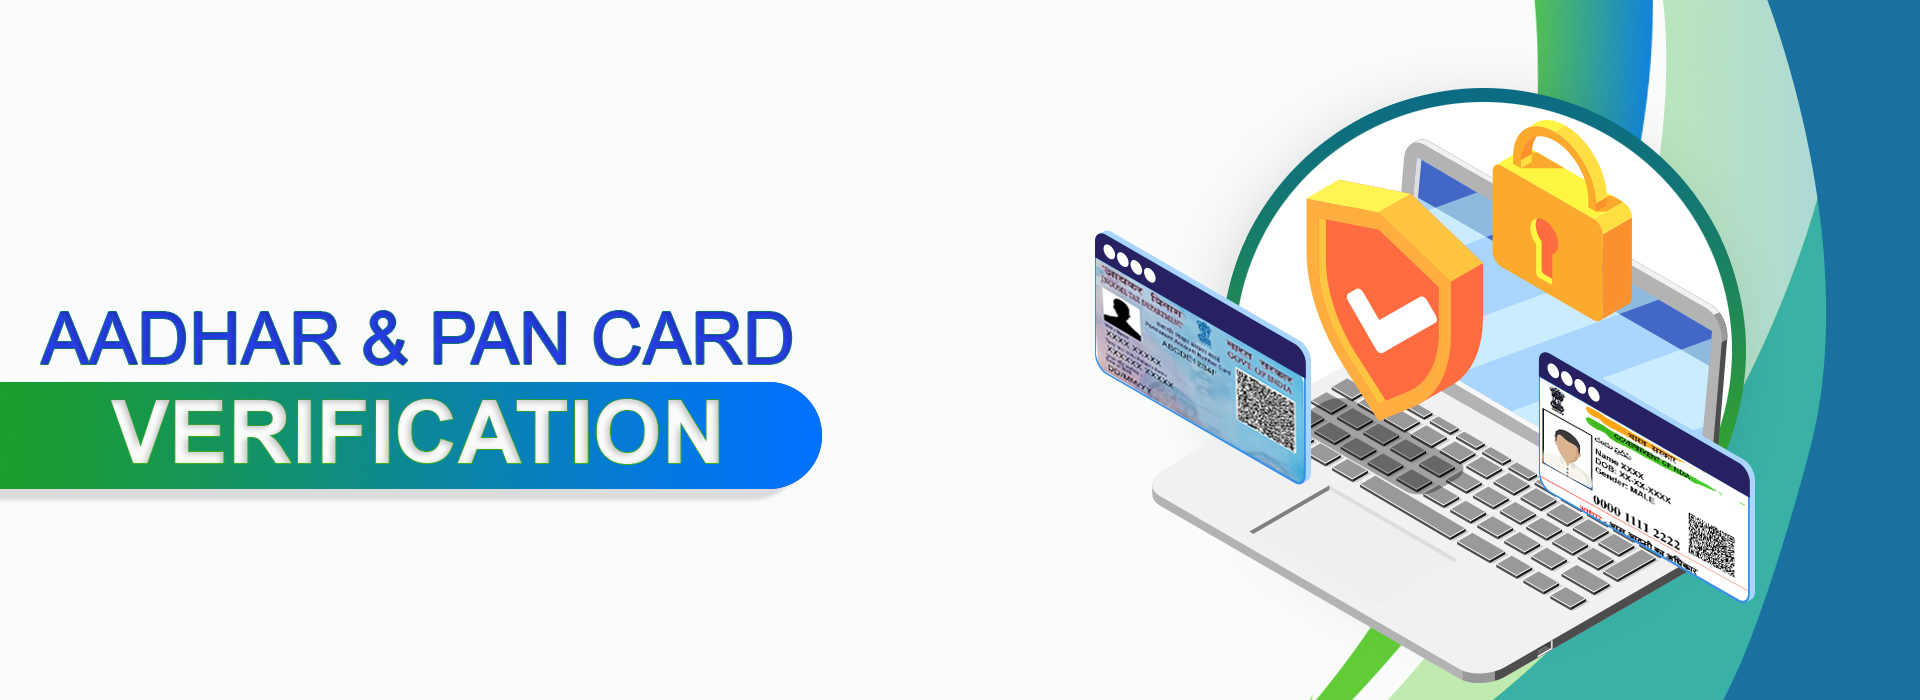 aadhar/pan card verification